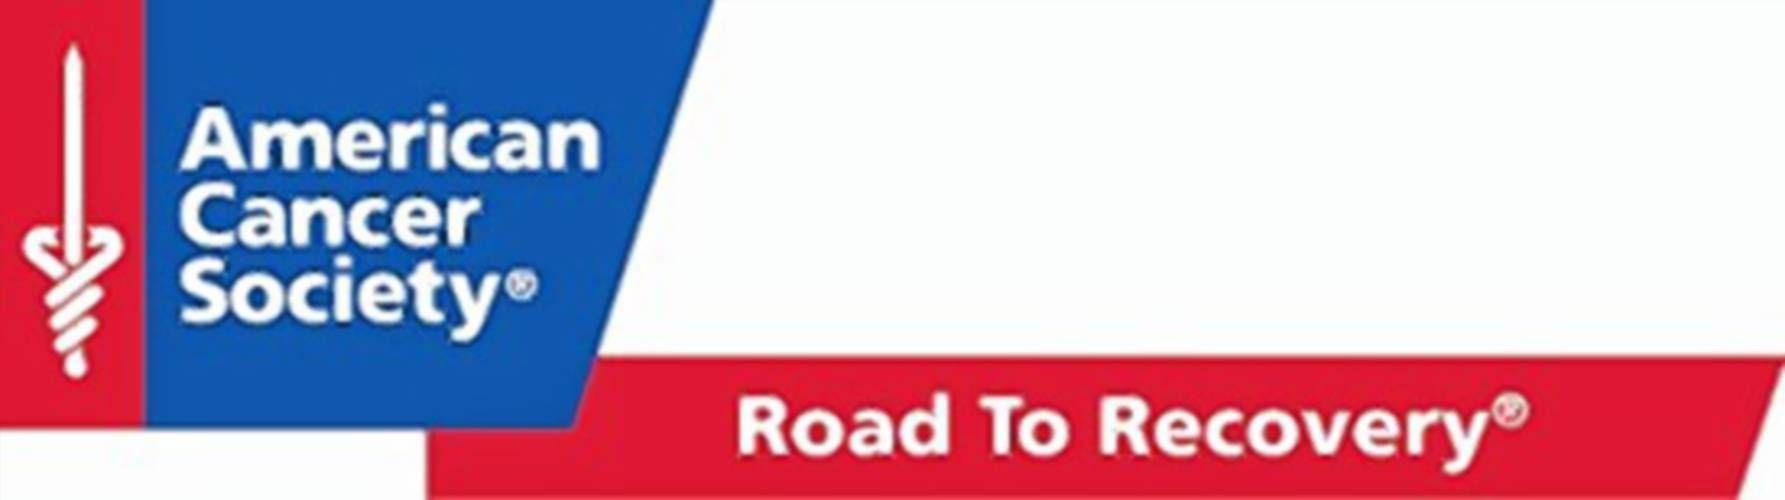 American Cancer Society Logo - Athol Daily News - American Cancer Society recruiting drivers